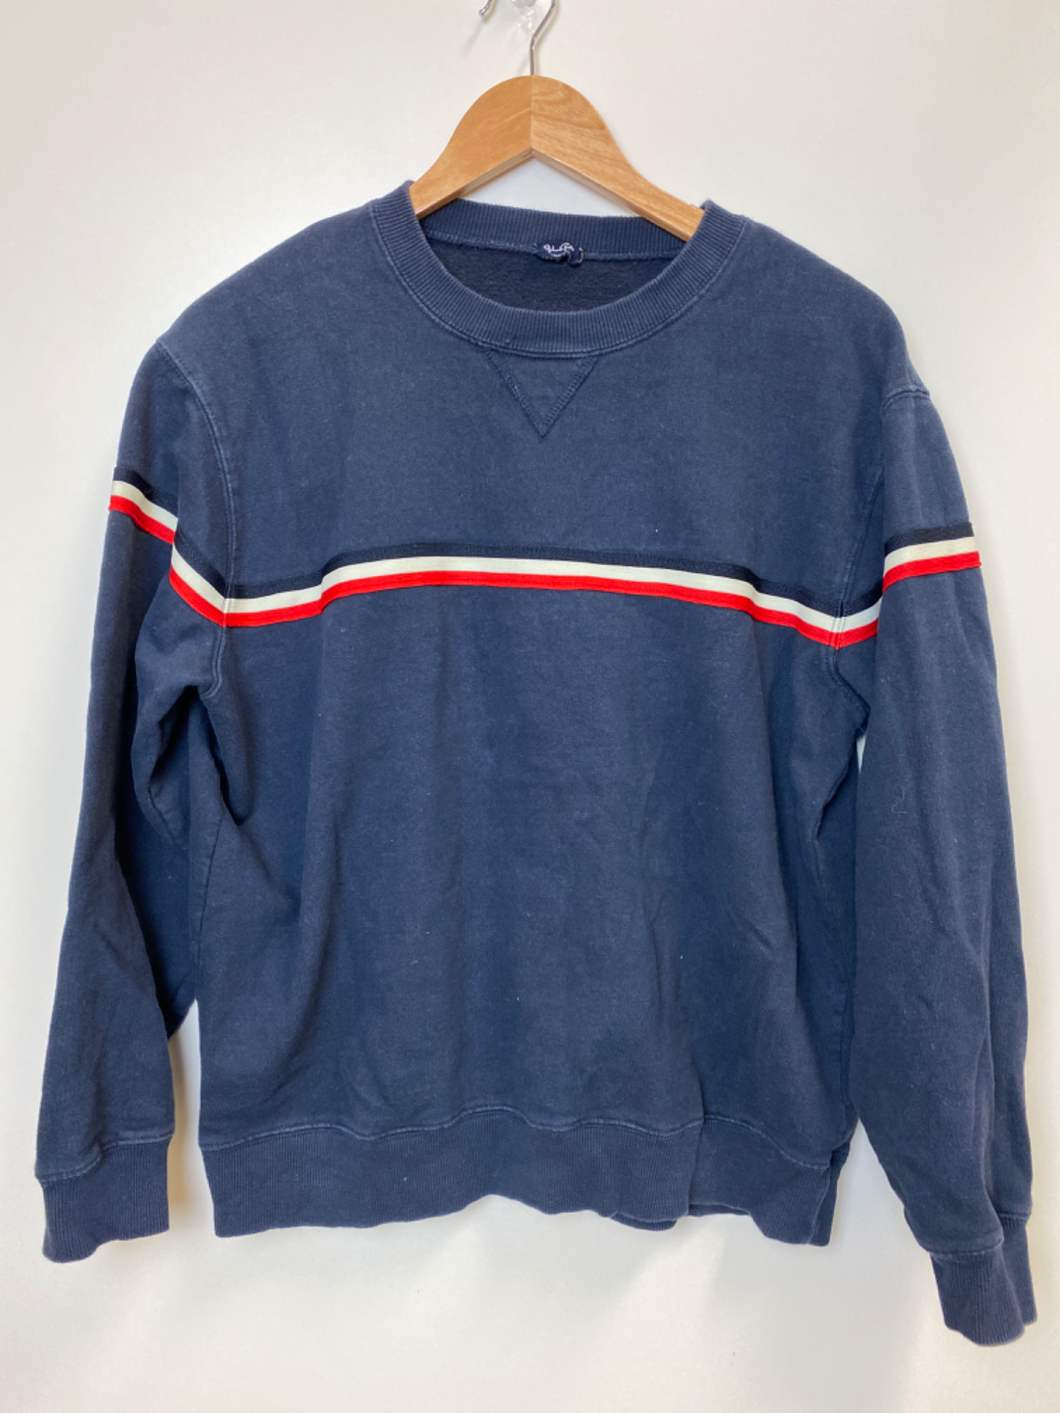 John Galt Sweatshirt Size Medium